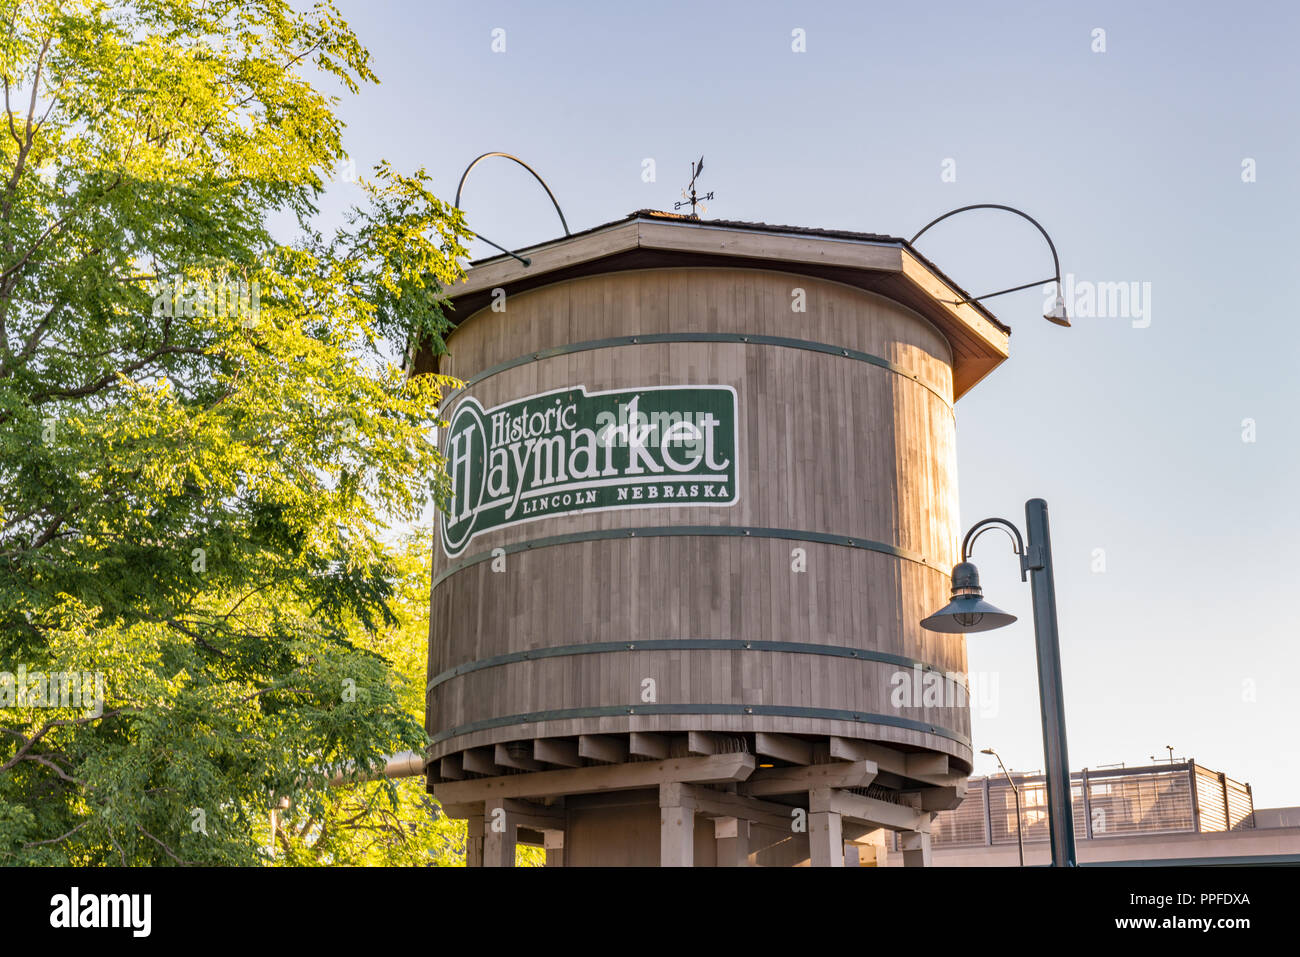 LINCOLN, NE - JULY 10, 2018: Railroad water tower in the historic Haymarket District of Lincoln, Nebraska Stock Photo